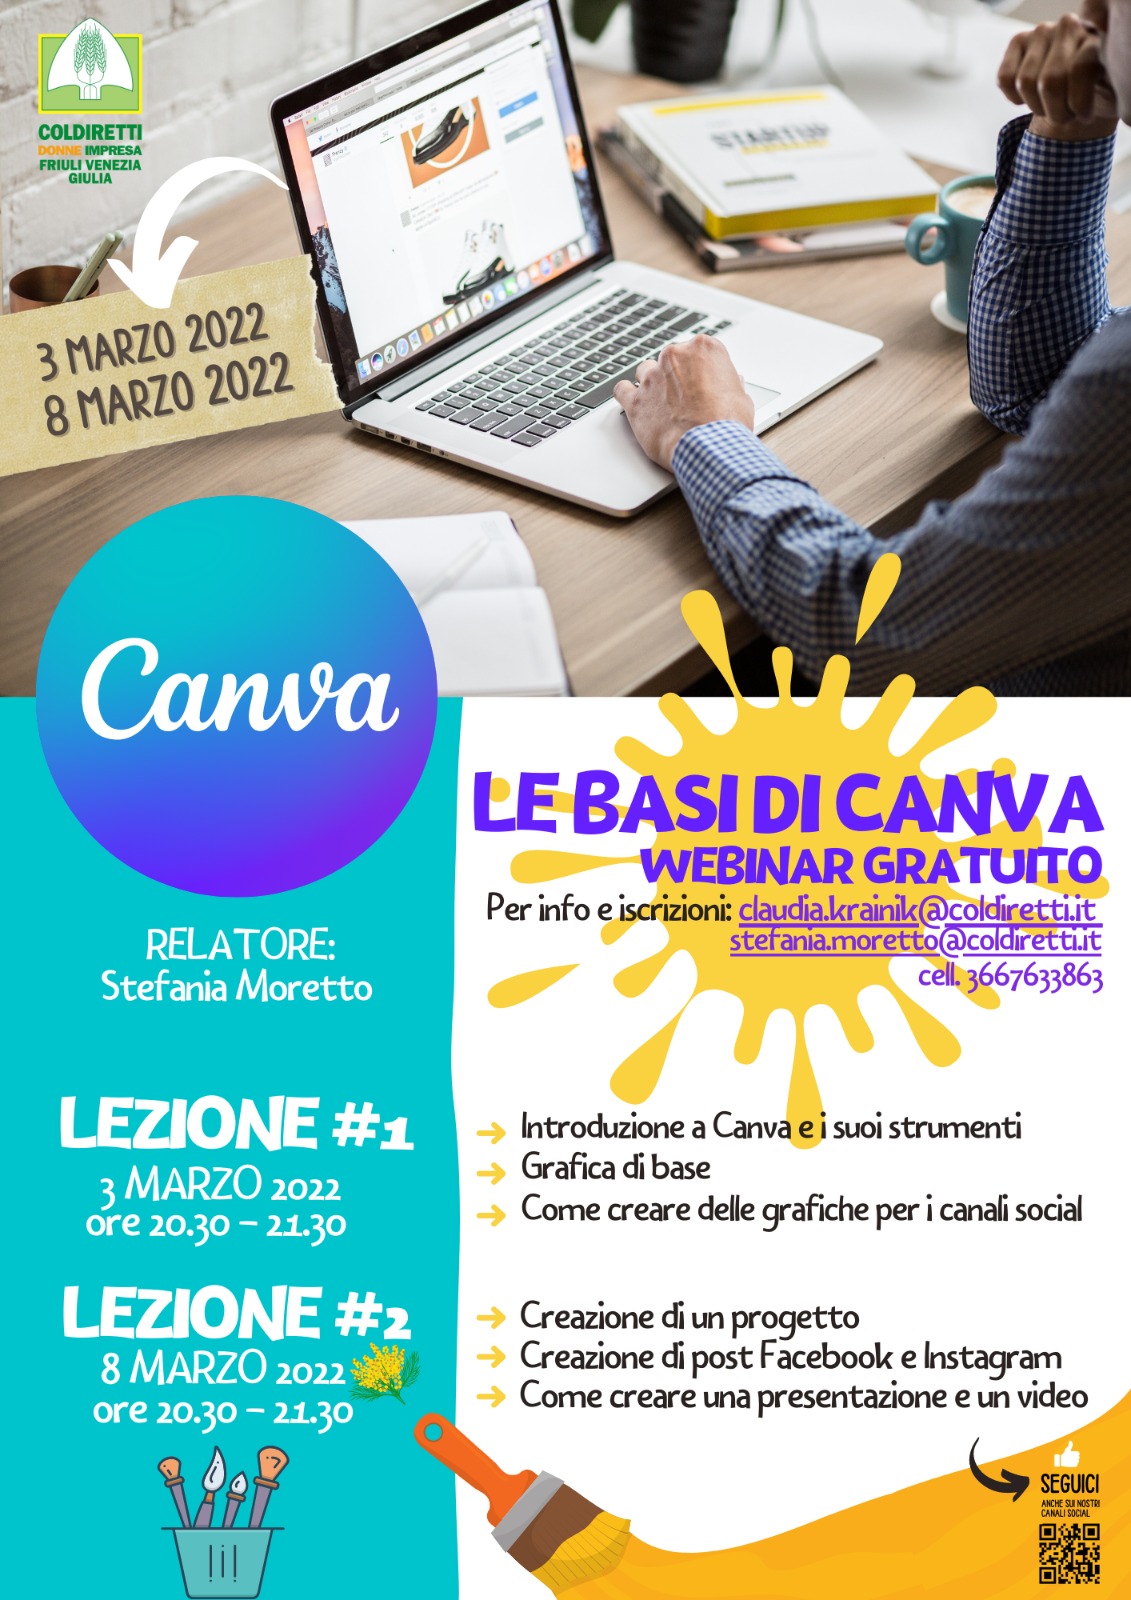 Webinair Le basi di Canva Friuli Venezia Giulia